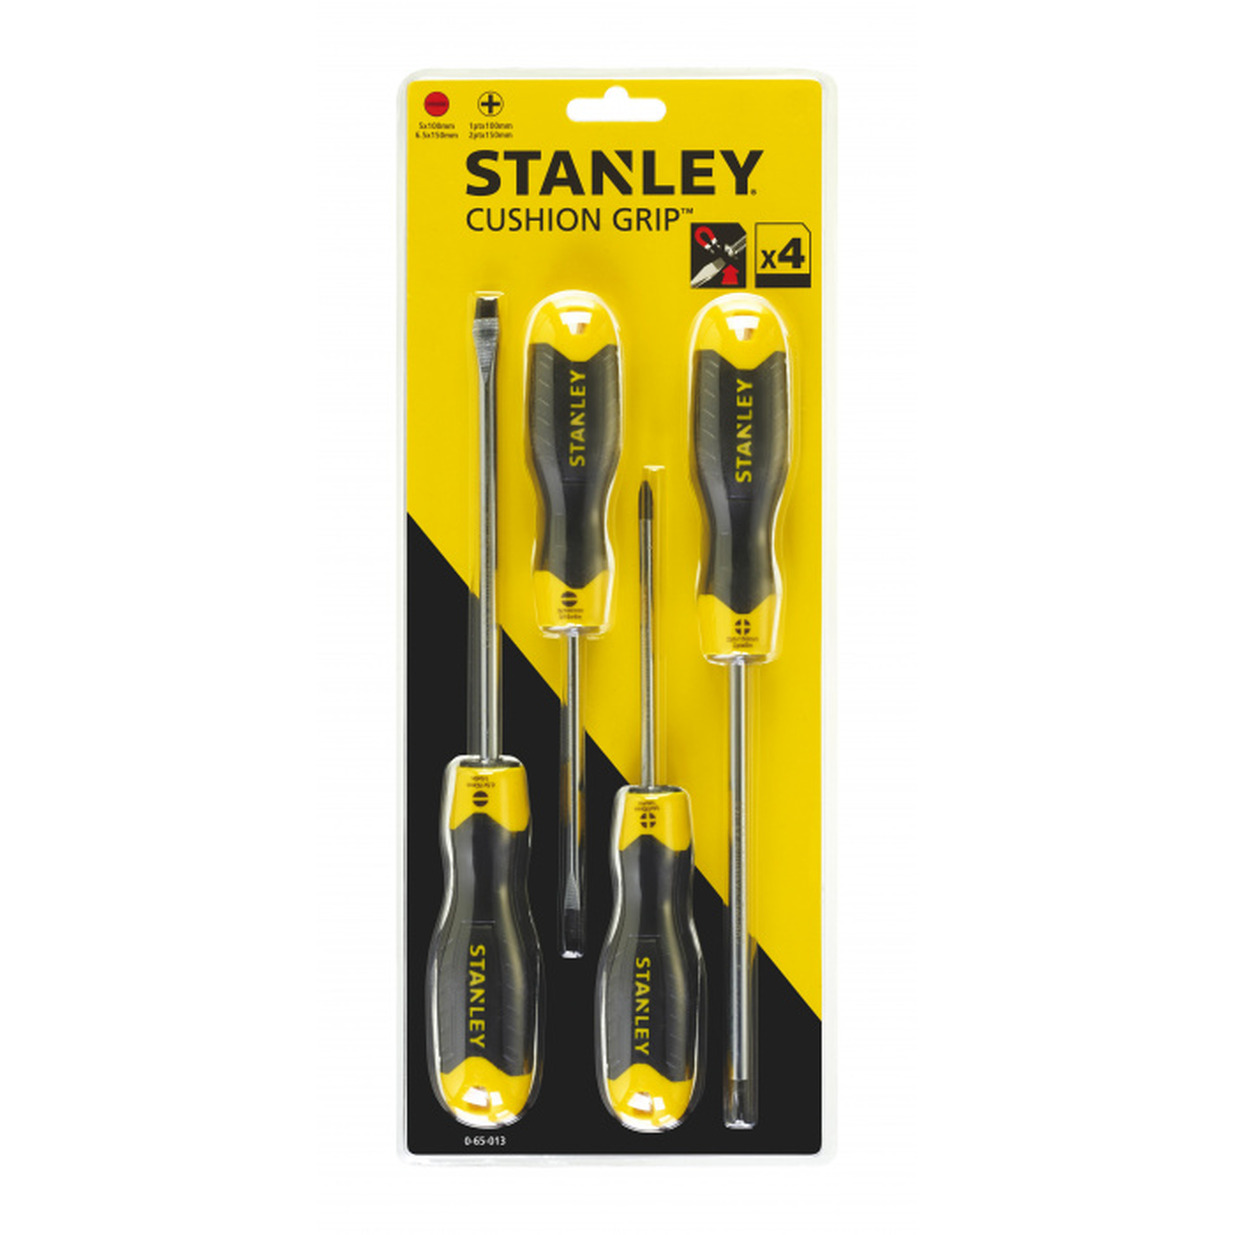 Набор отверток Stanley Cushion grip 4шт 0-65-013 набор маркеров stanley цветные 4шт stht81391 0